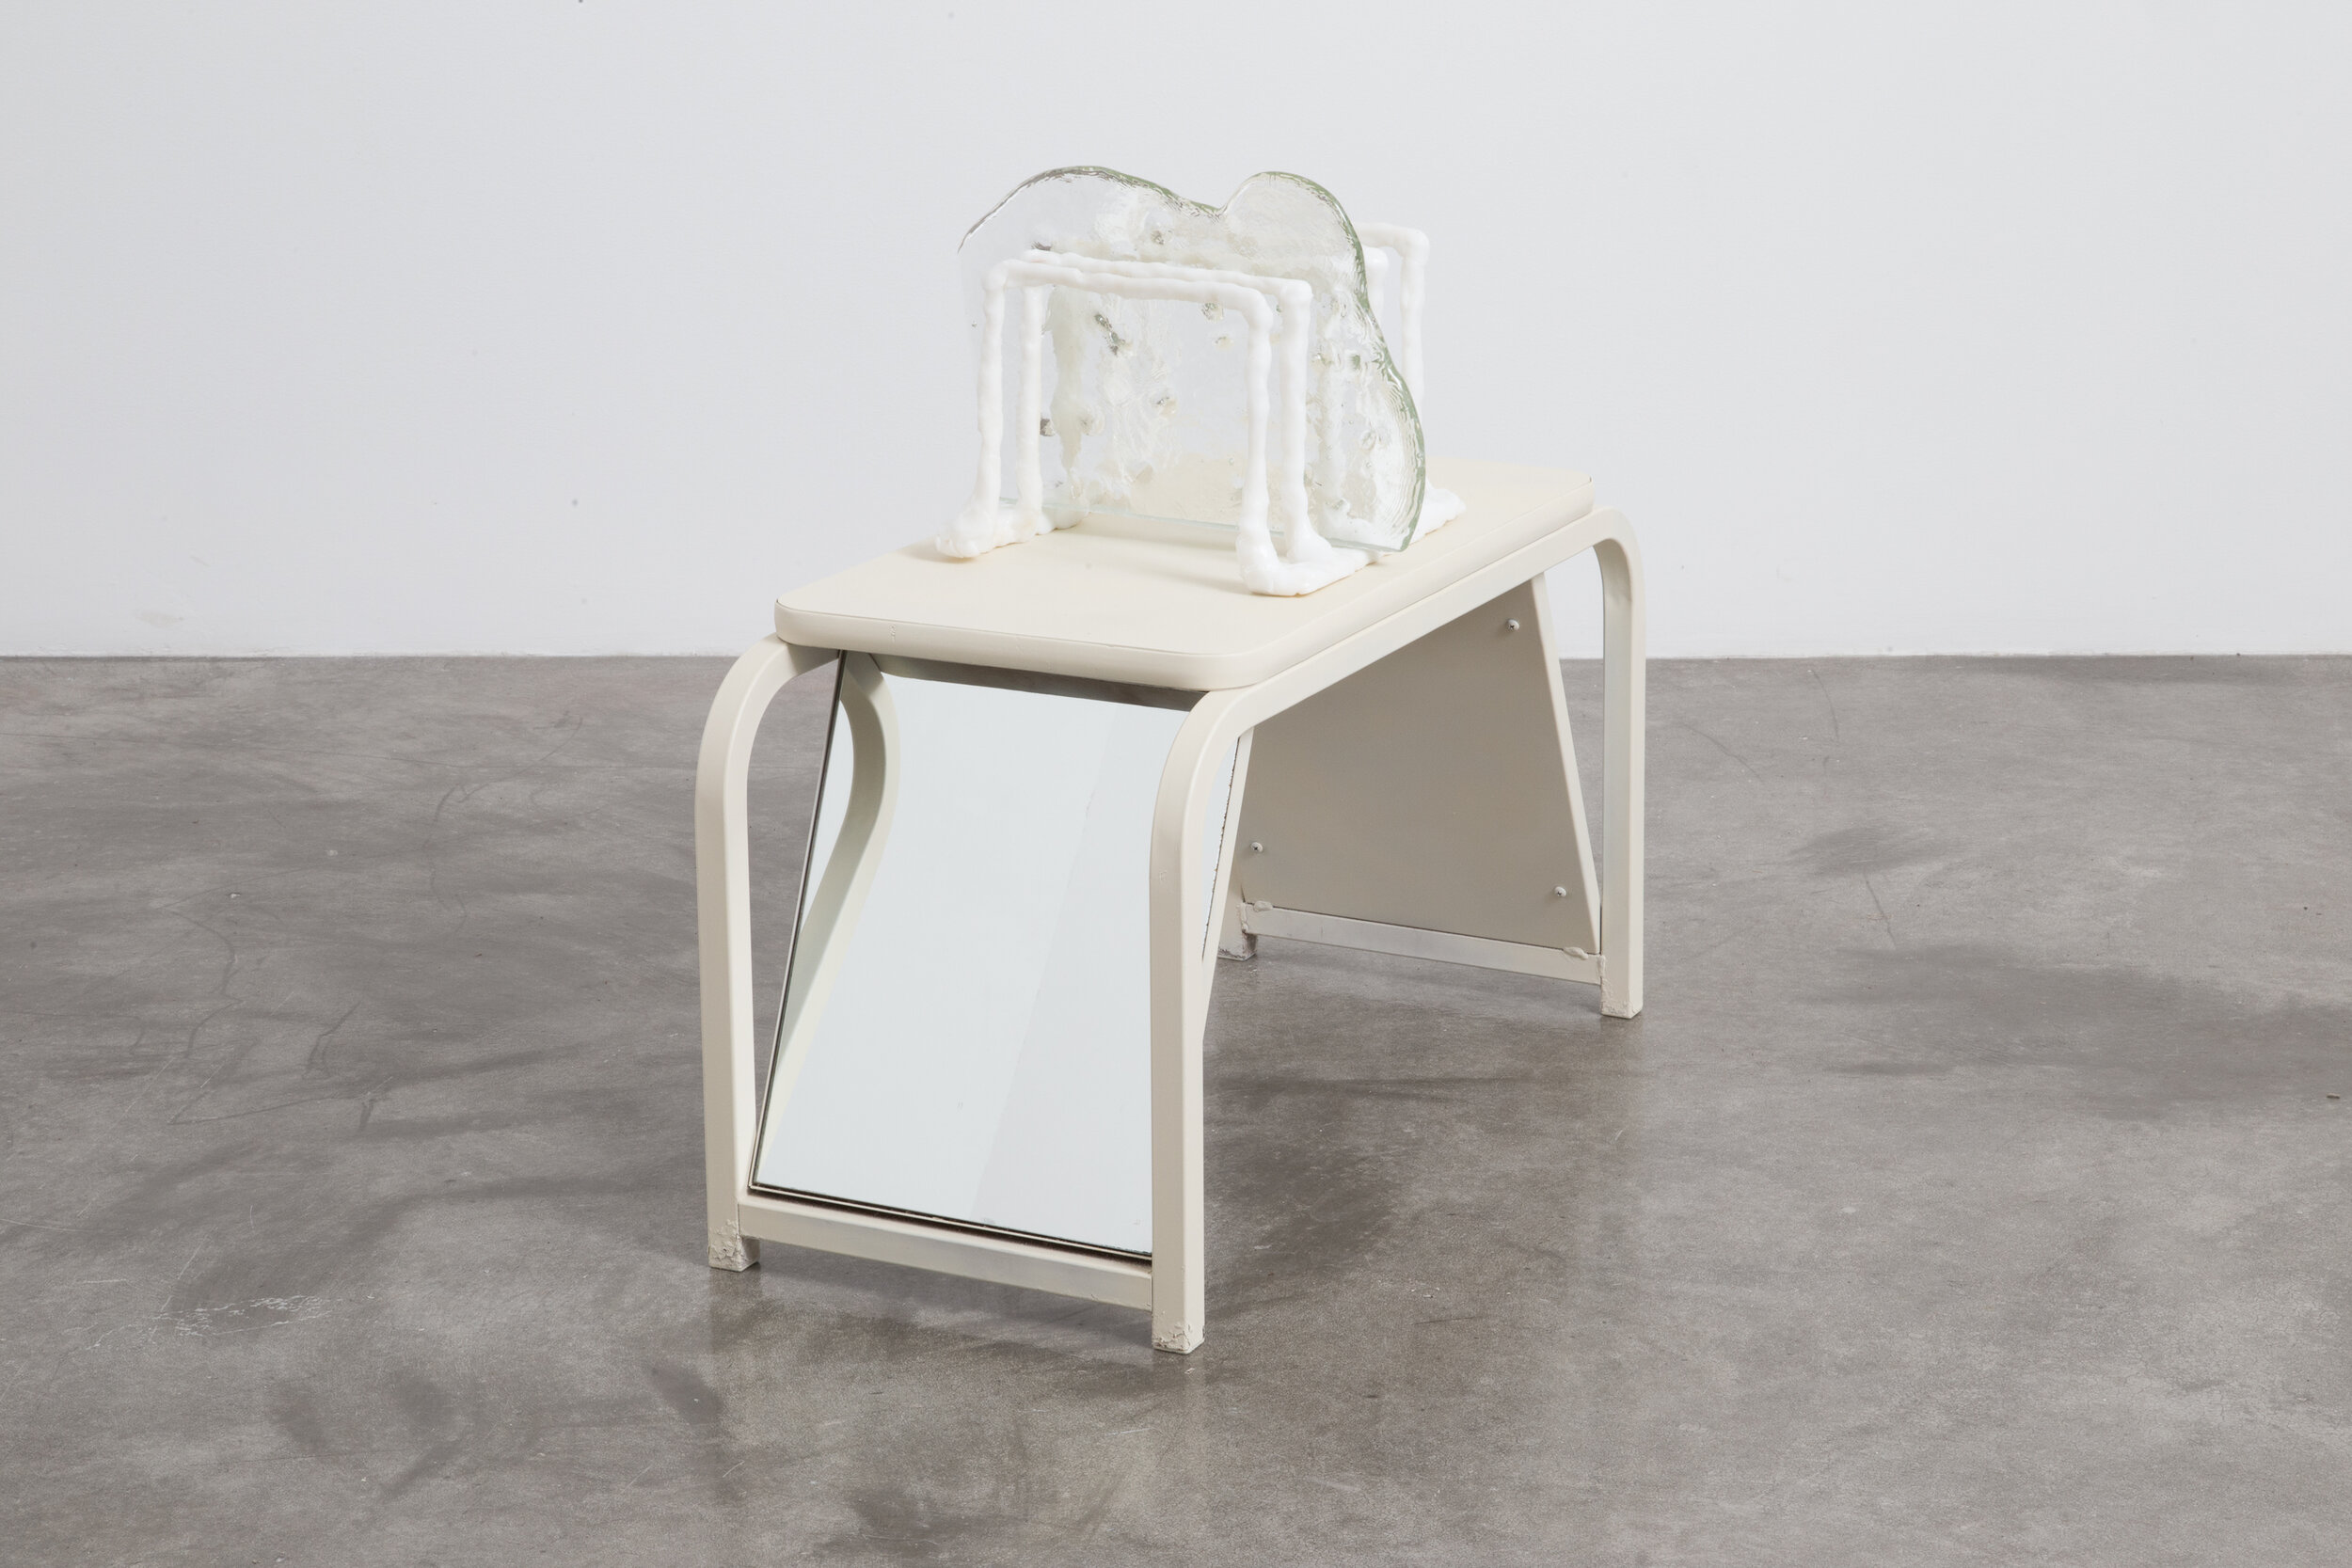  Paper Sorter Prototype, 2019, Plastic, Steel, Glass, Enamel Paint, Shoe Bench, 12 x 24 x 36” 